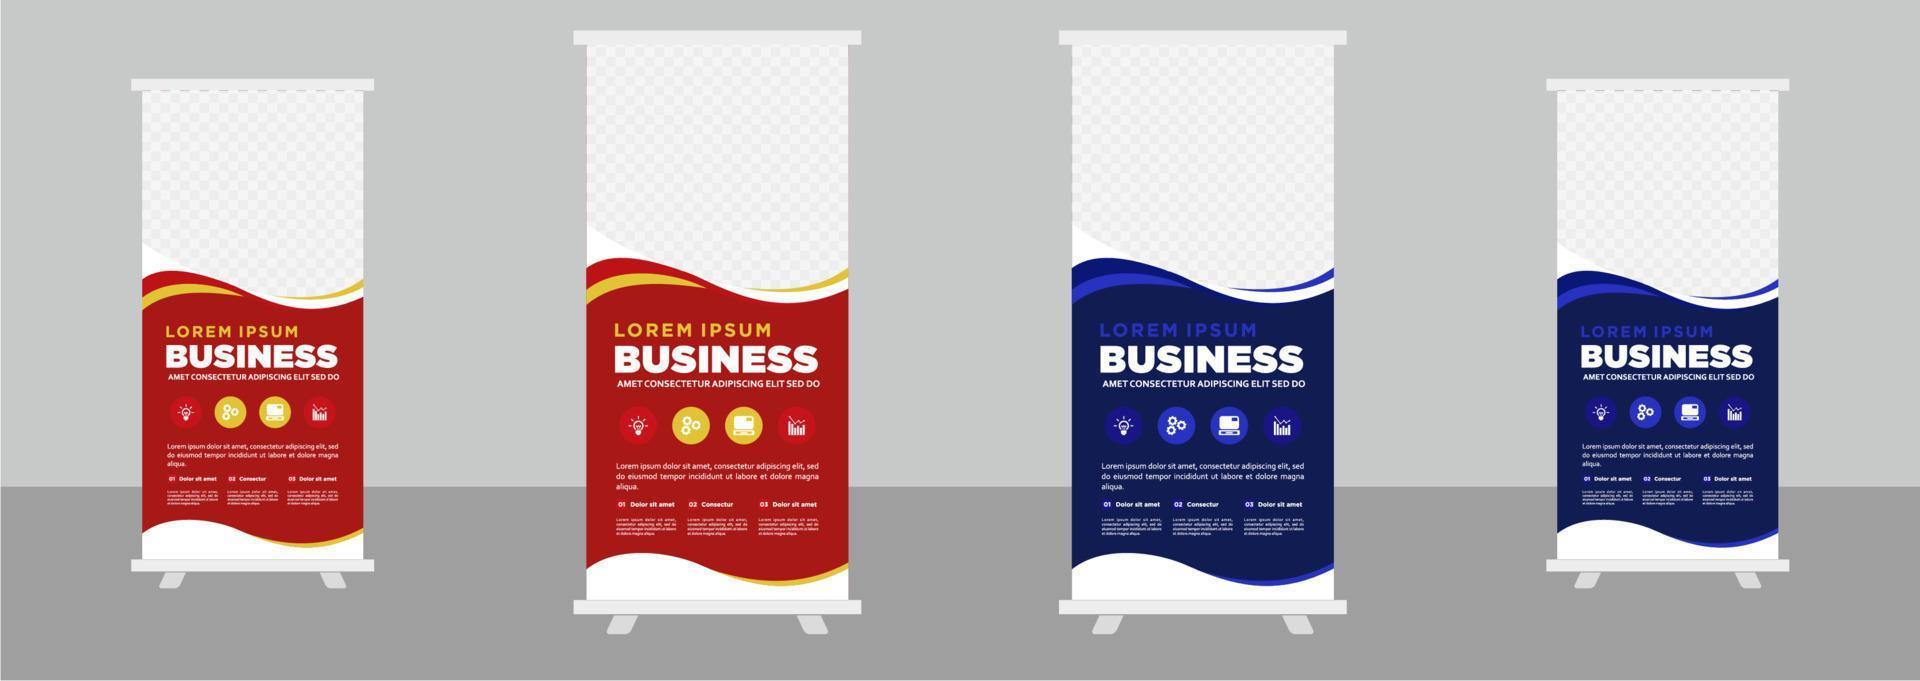 plantilla de diseño de banner de stand enrollable de negocios corporativos vector